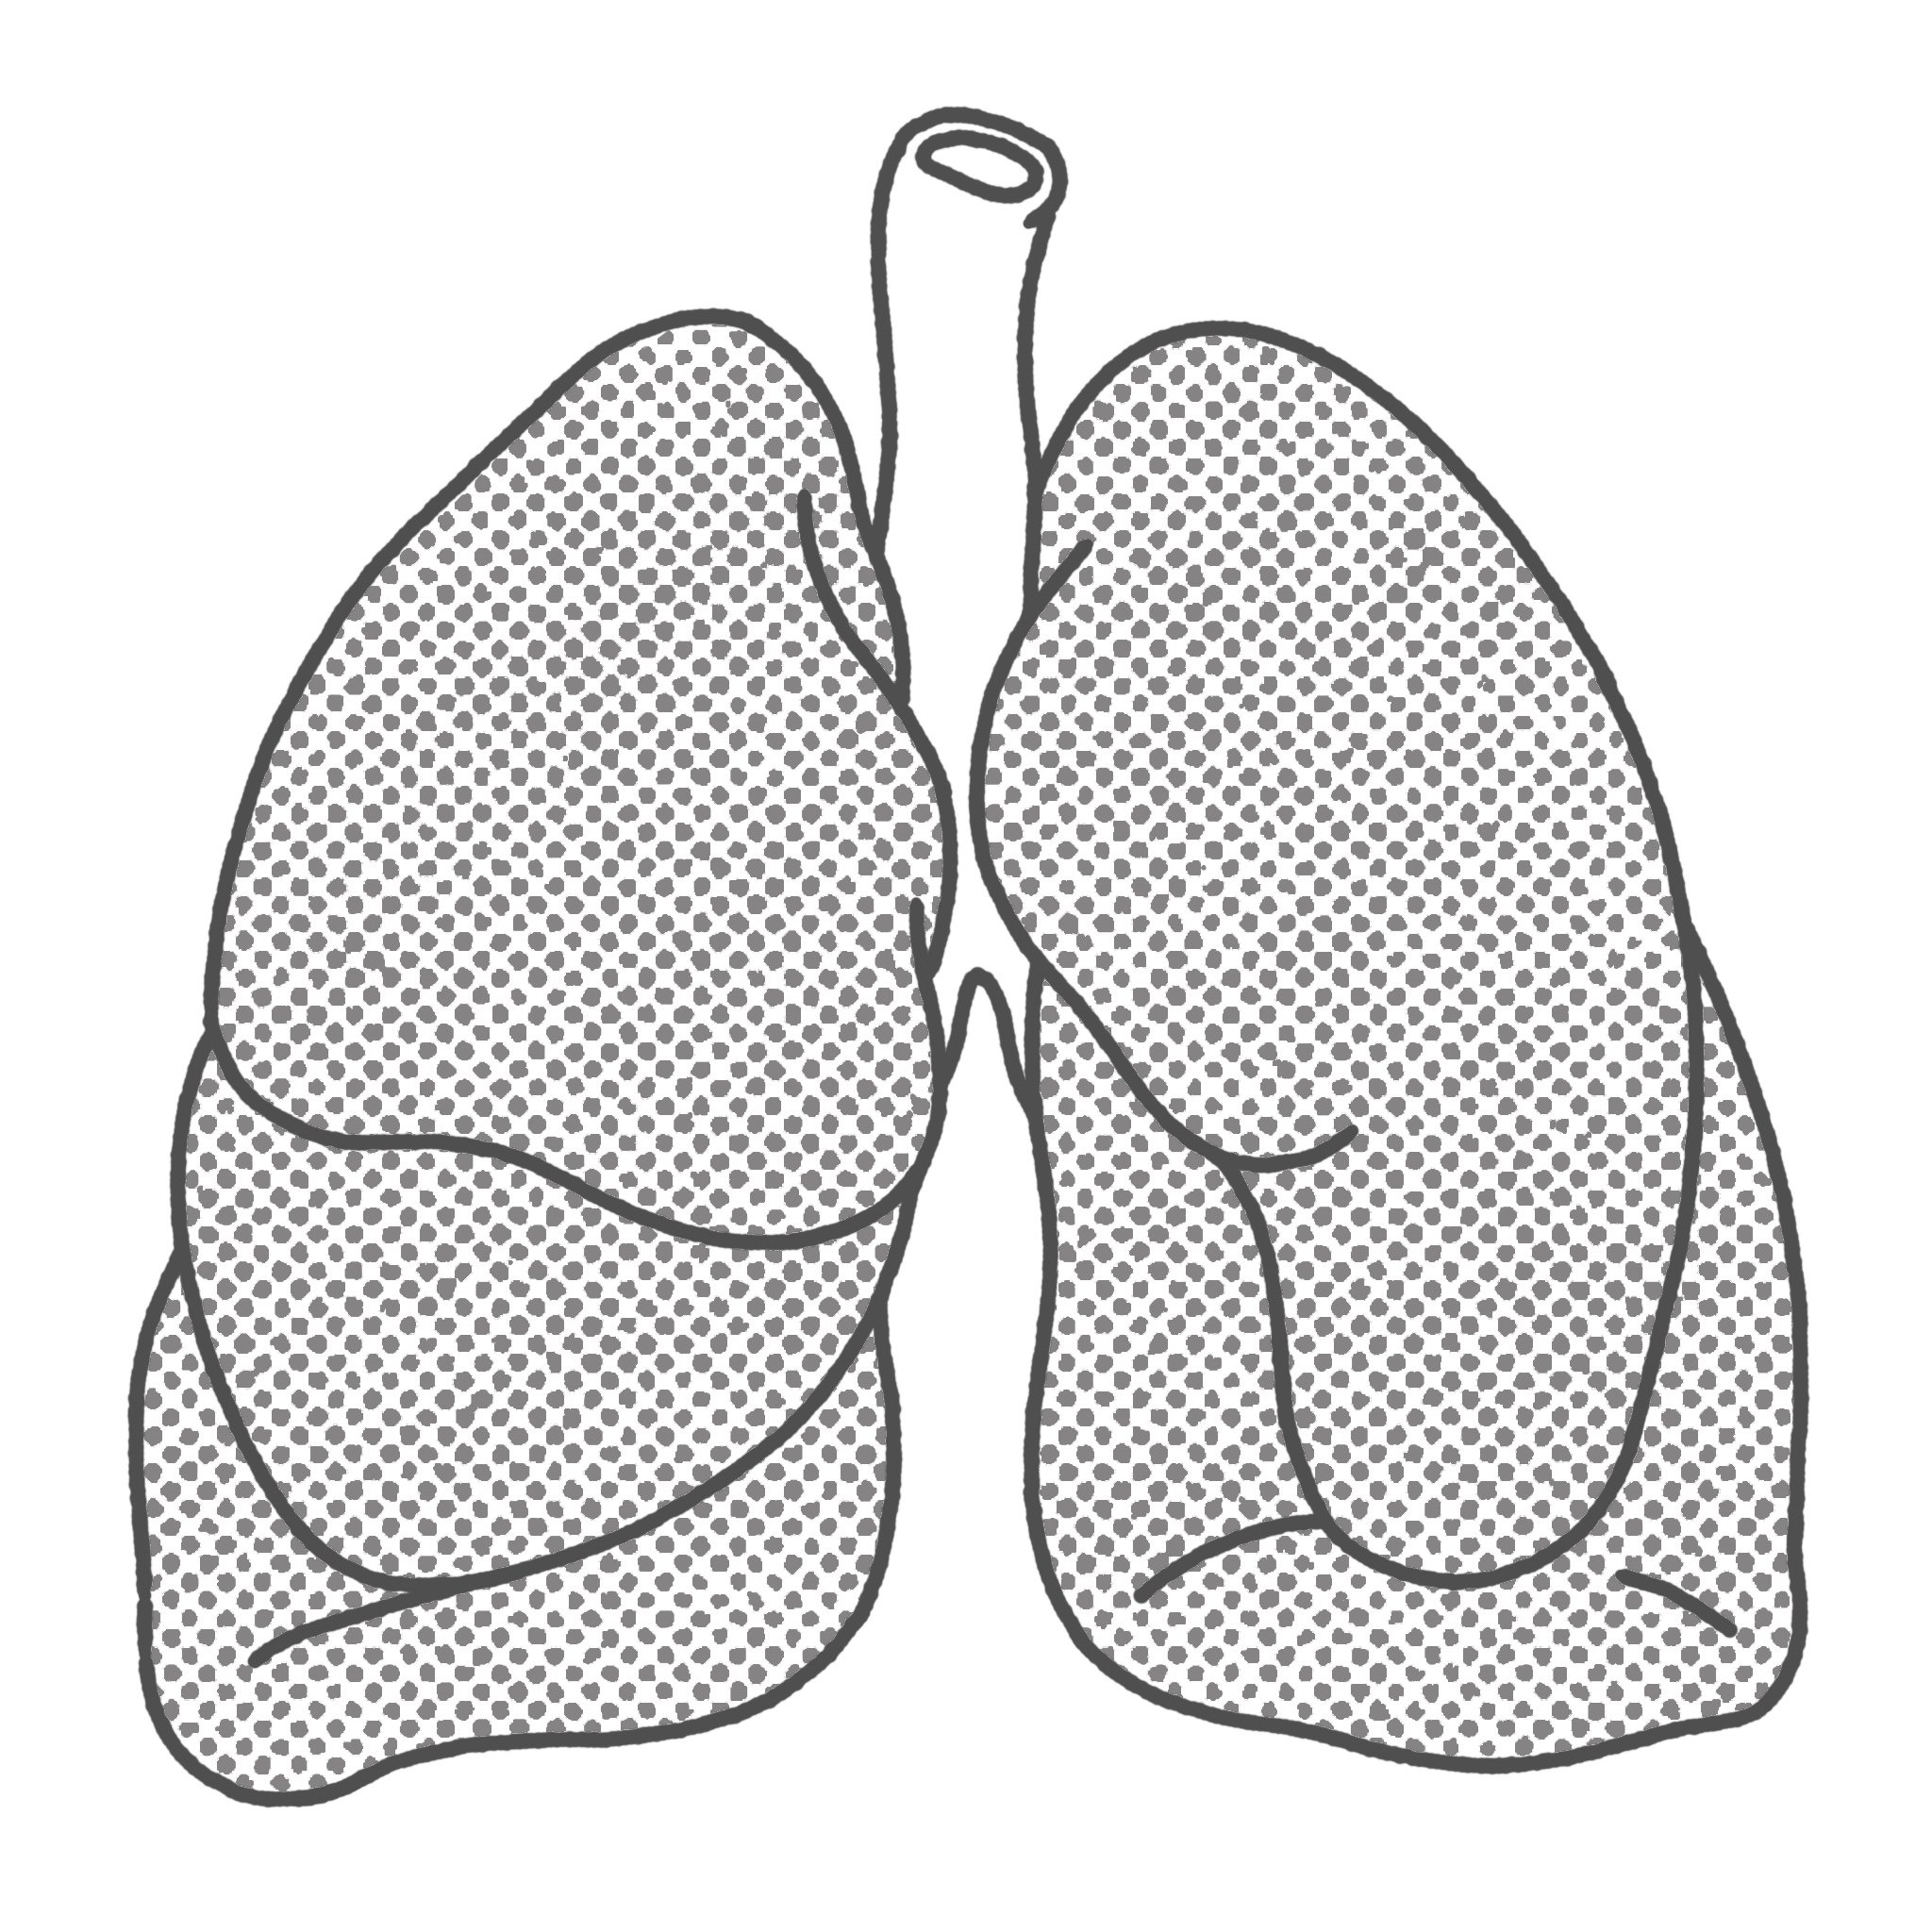 Lungs.jpg